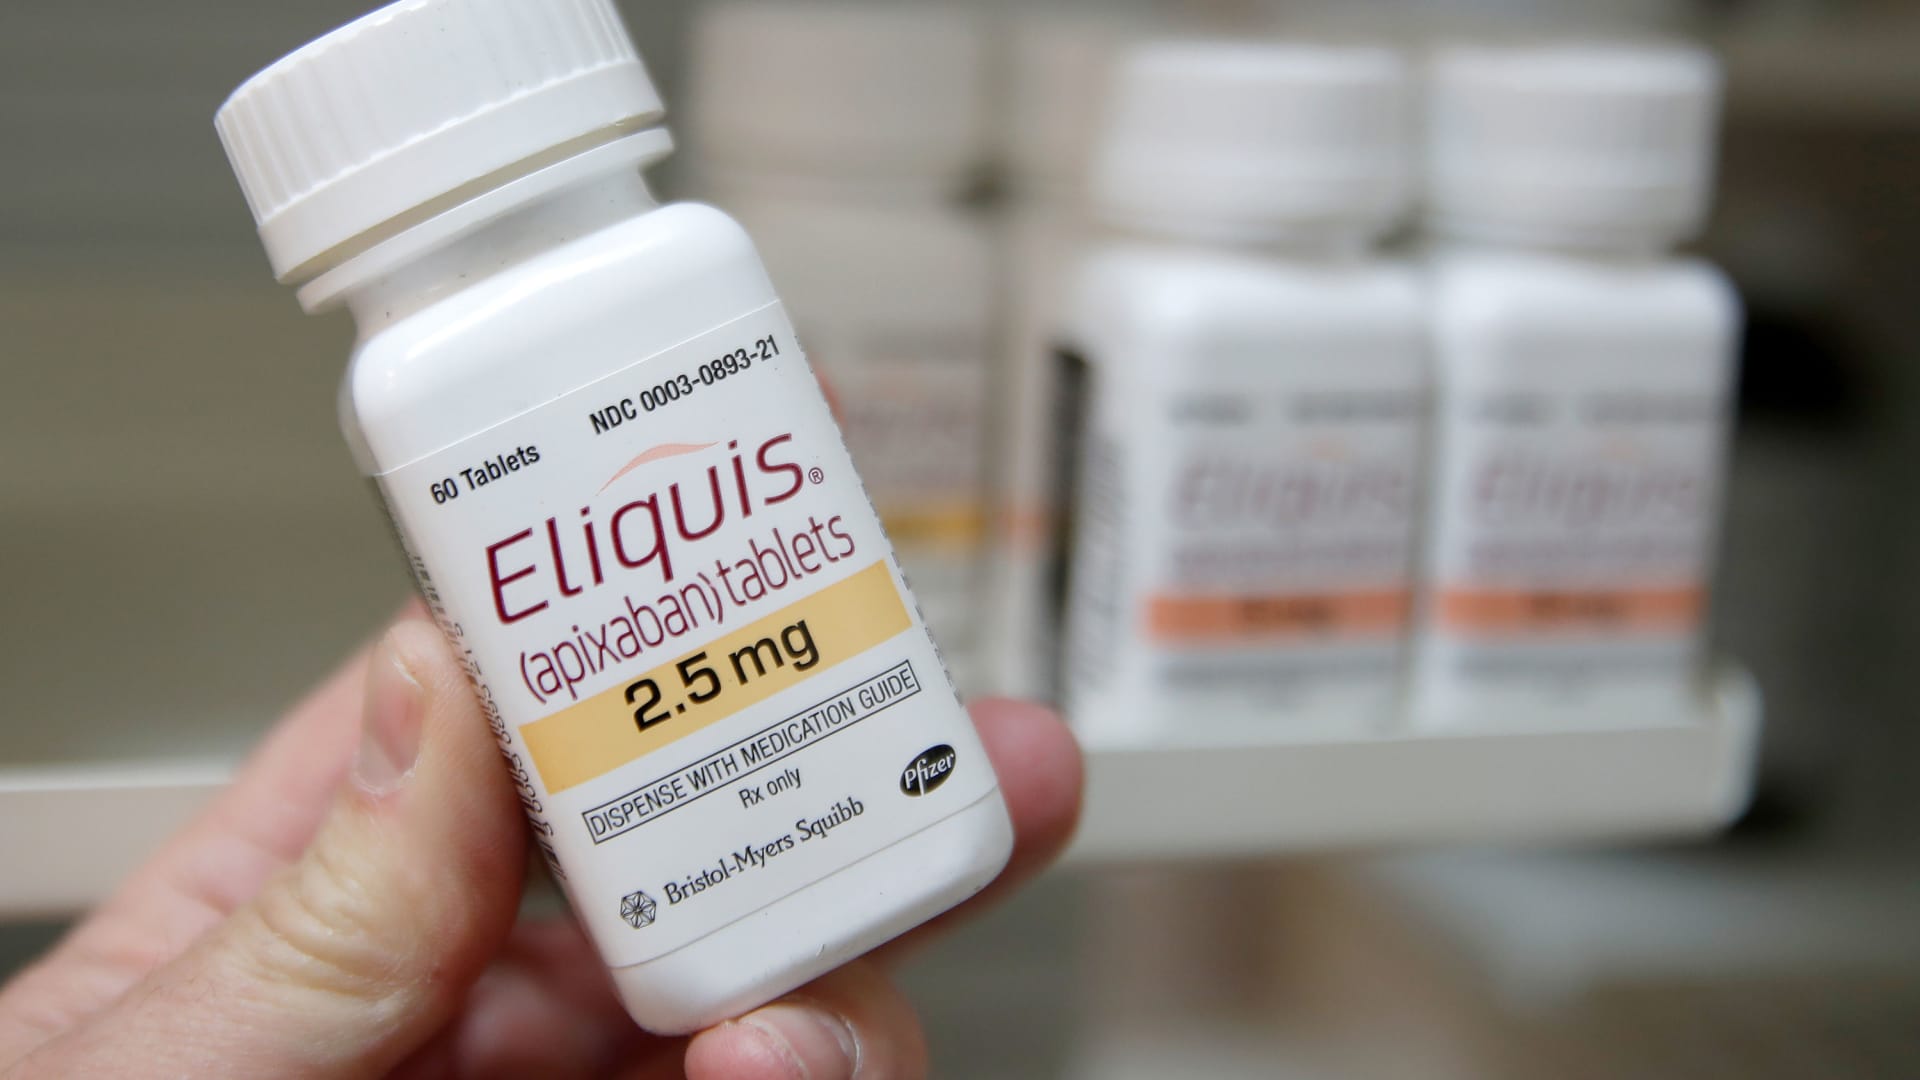 Federal judge declines to block Medicare drug price negotiations